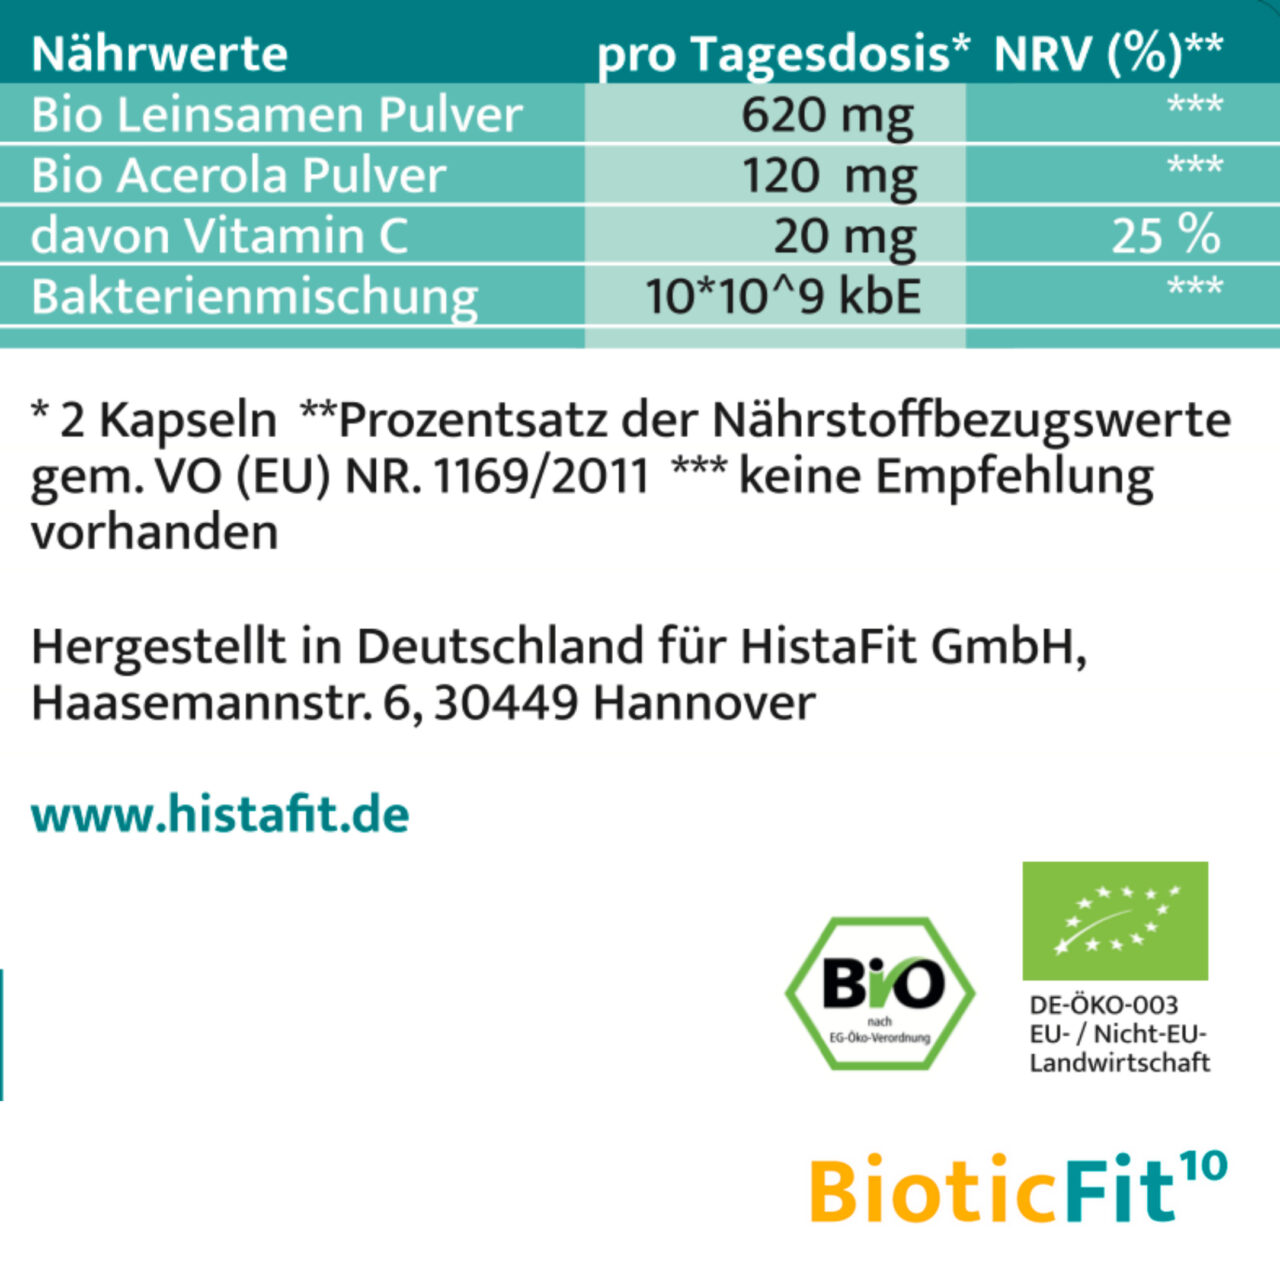 HistaFit BioticFit10 Nährwerte